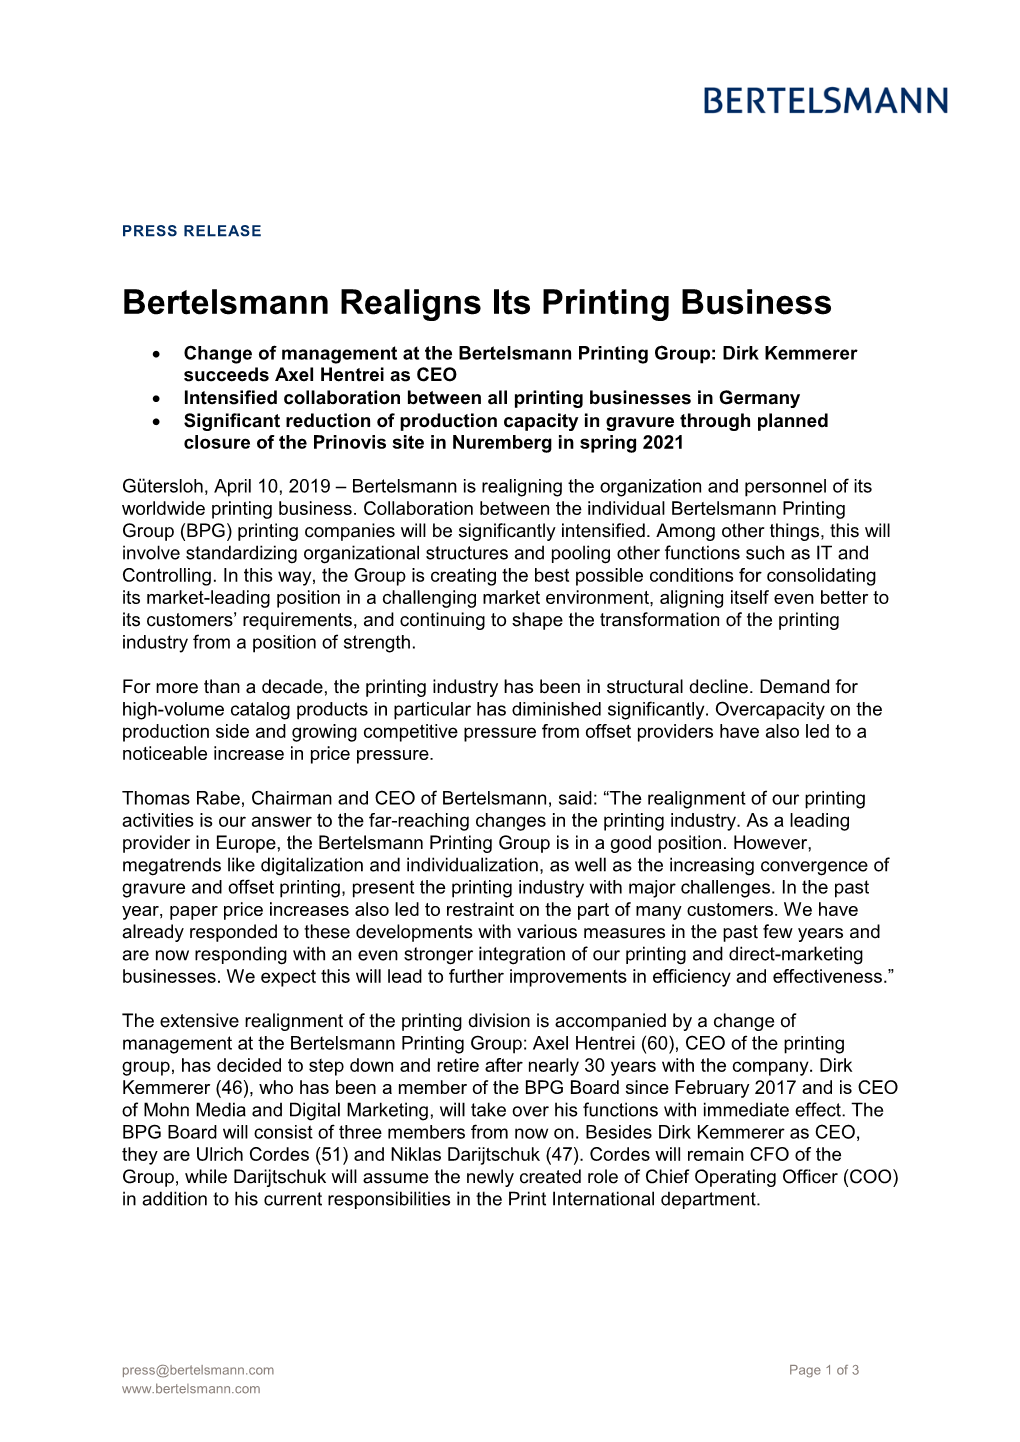 Bertelsmann Realigns Its Printing Business